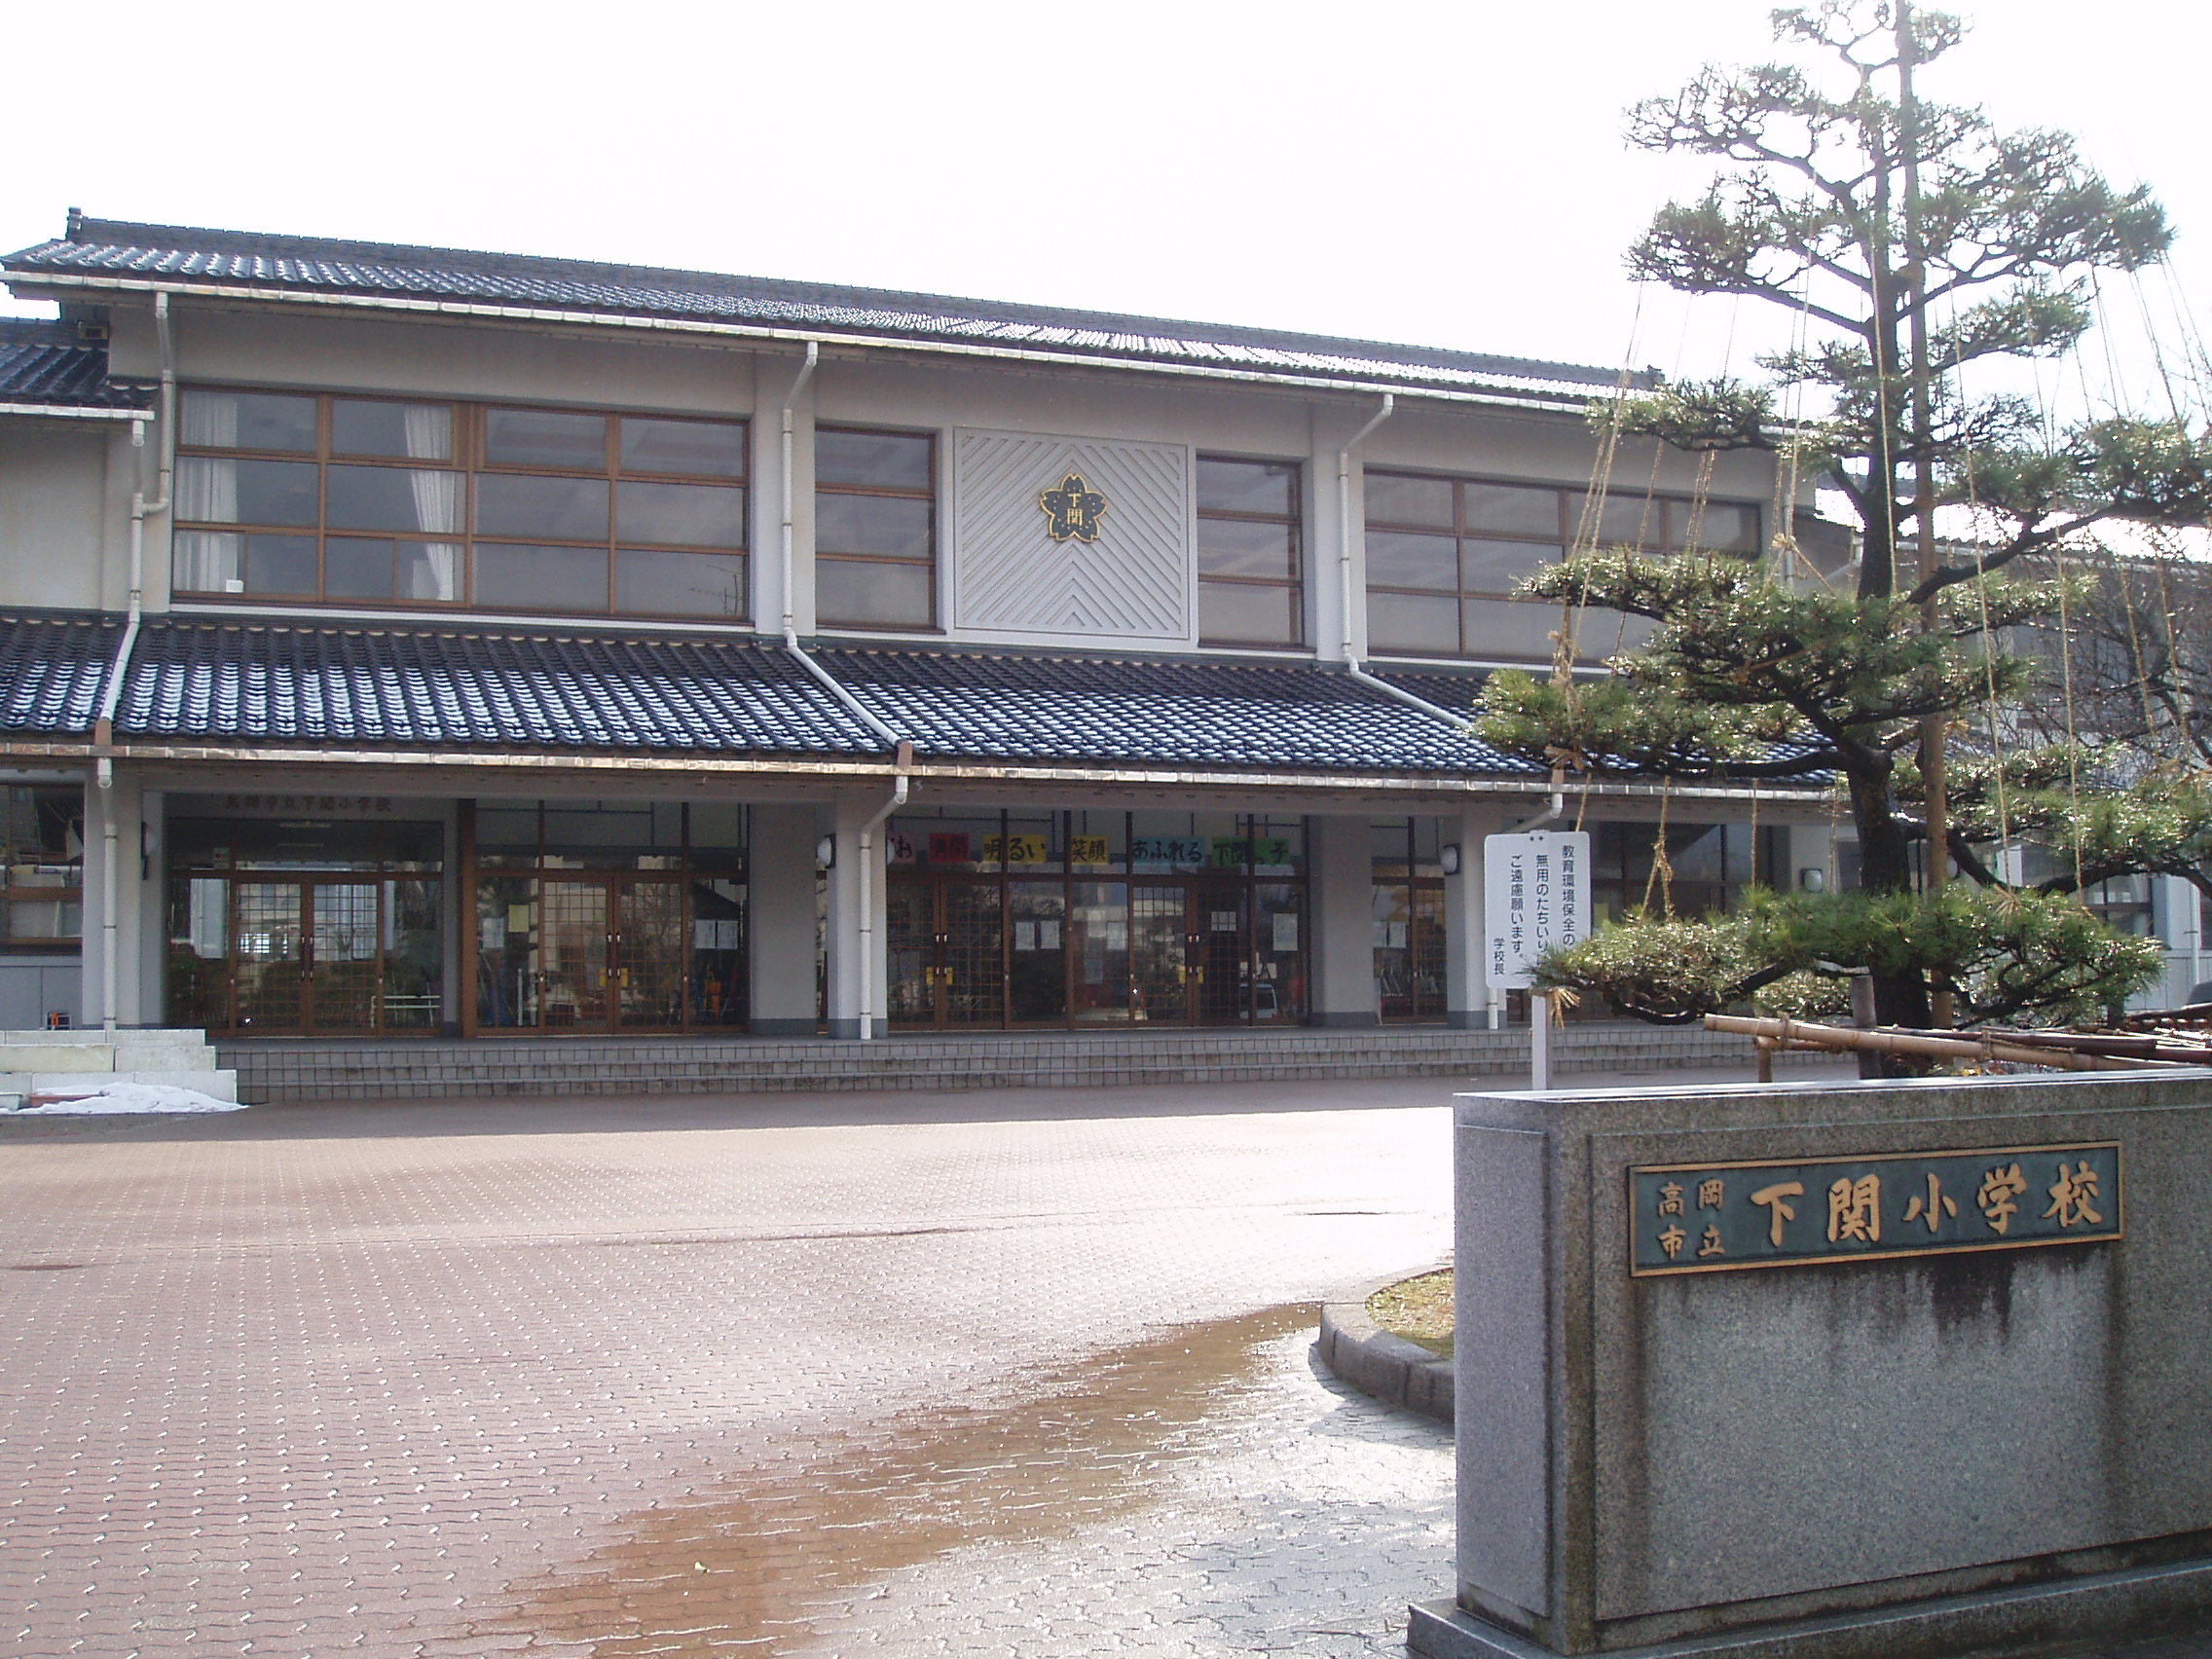 Primary school. 975m to Takaoka Municipal Shimonoseki elementary school (elementary school)